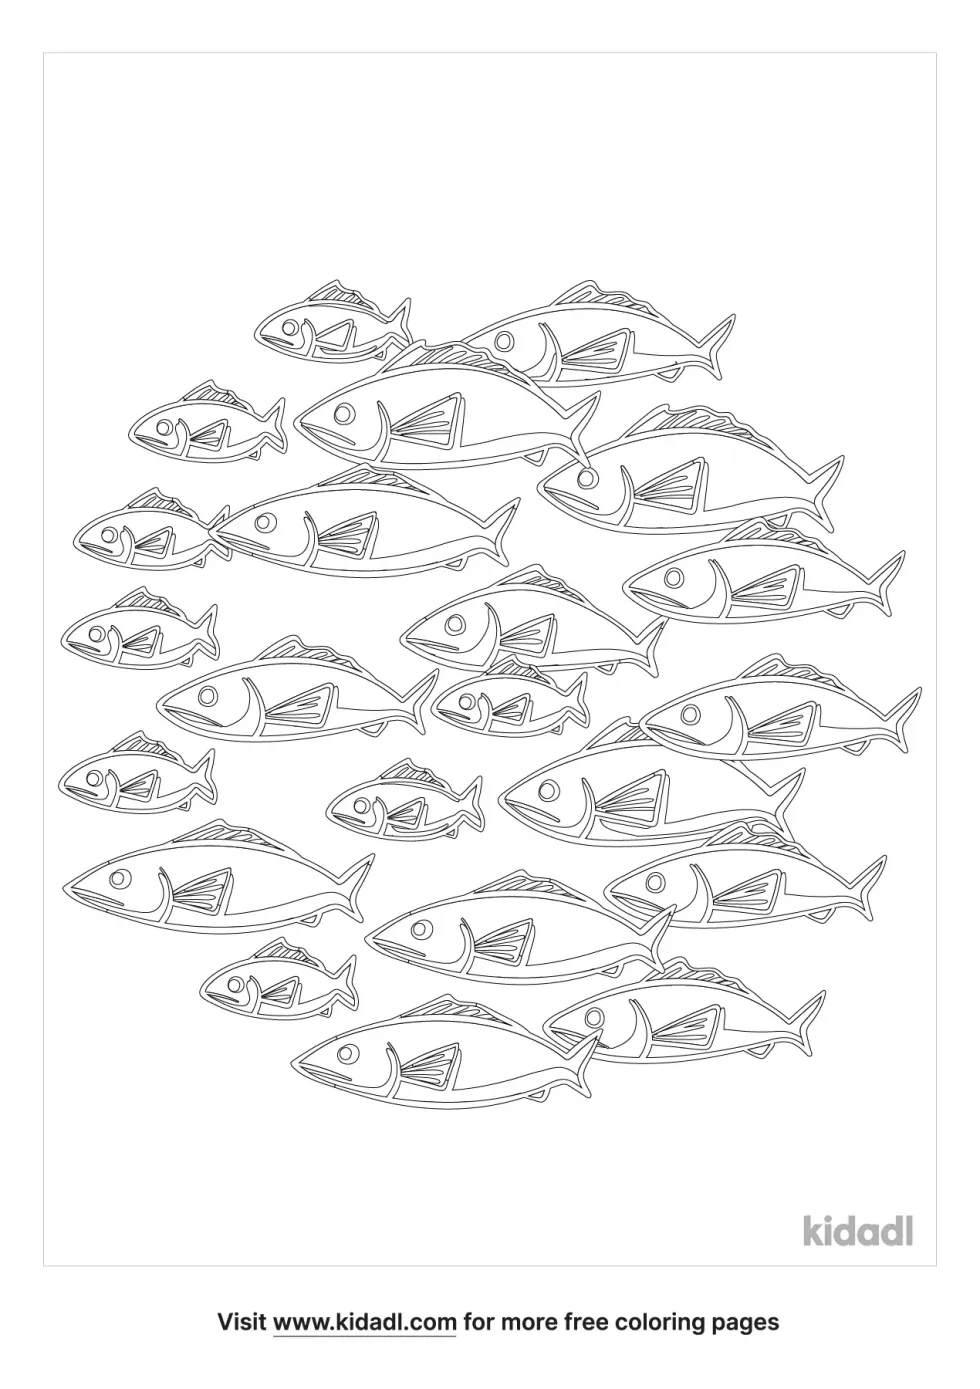 School Of Fish